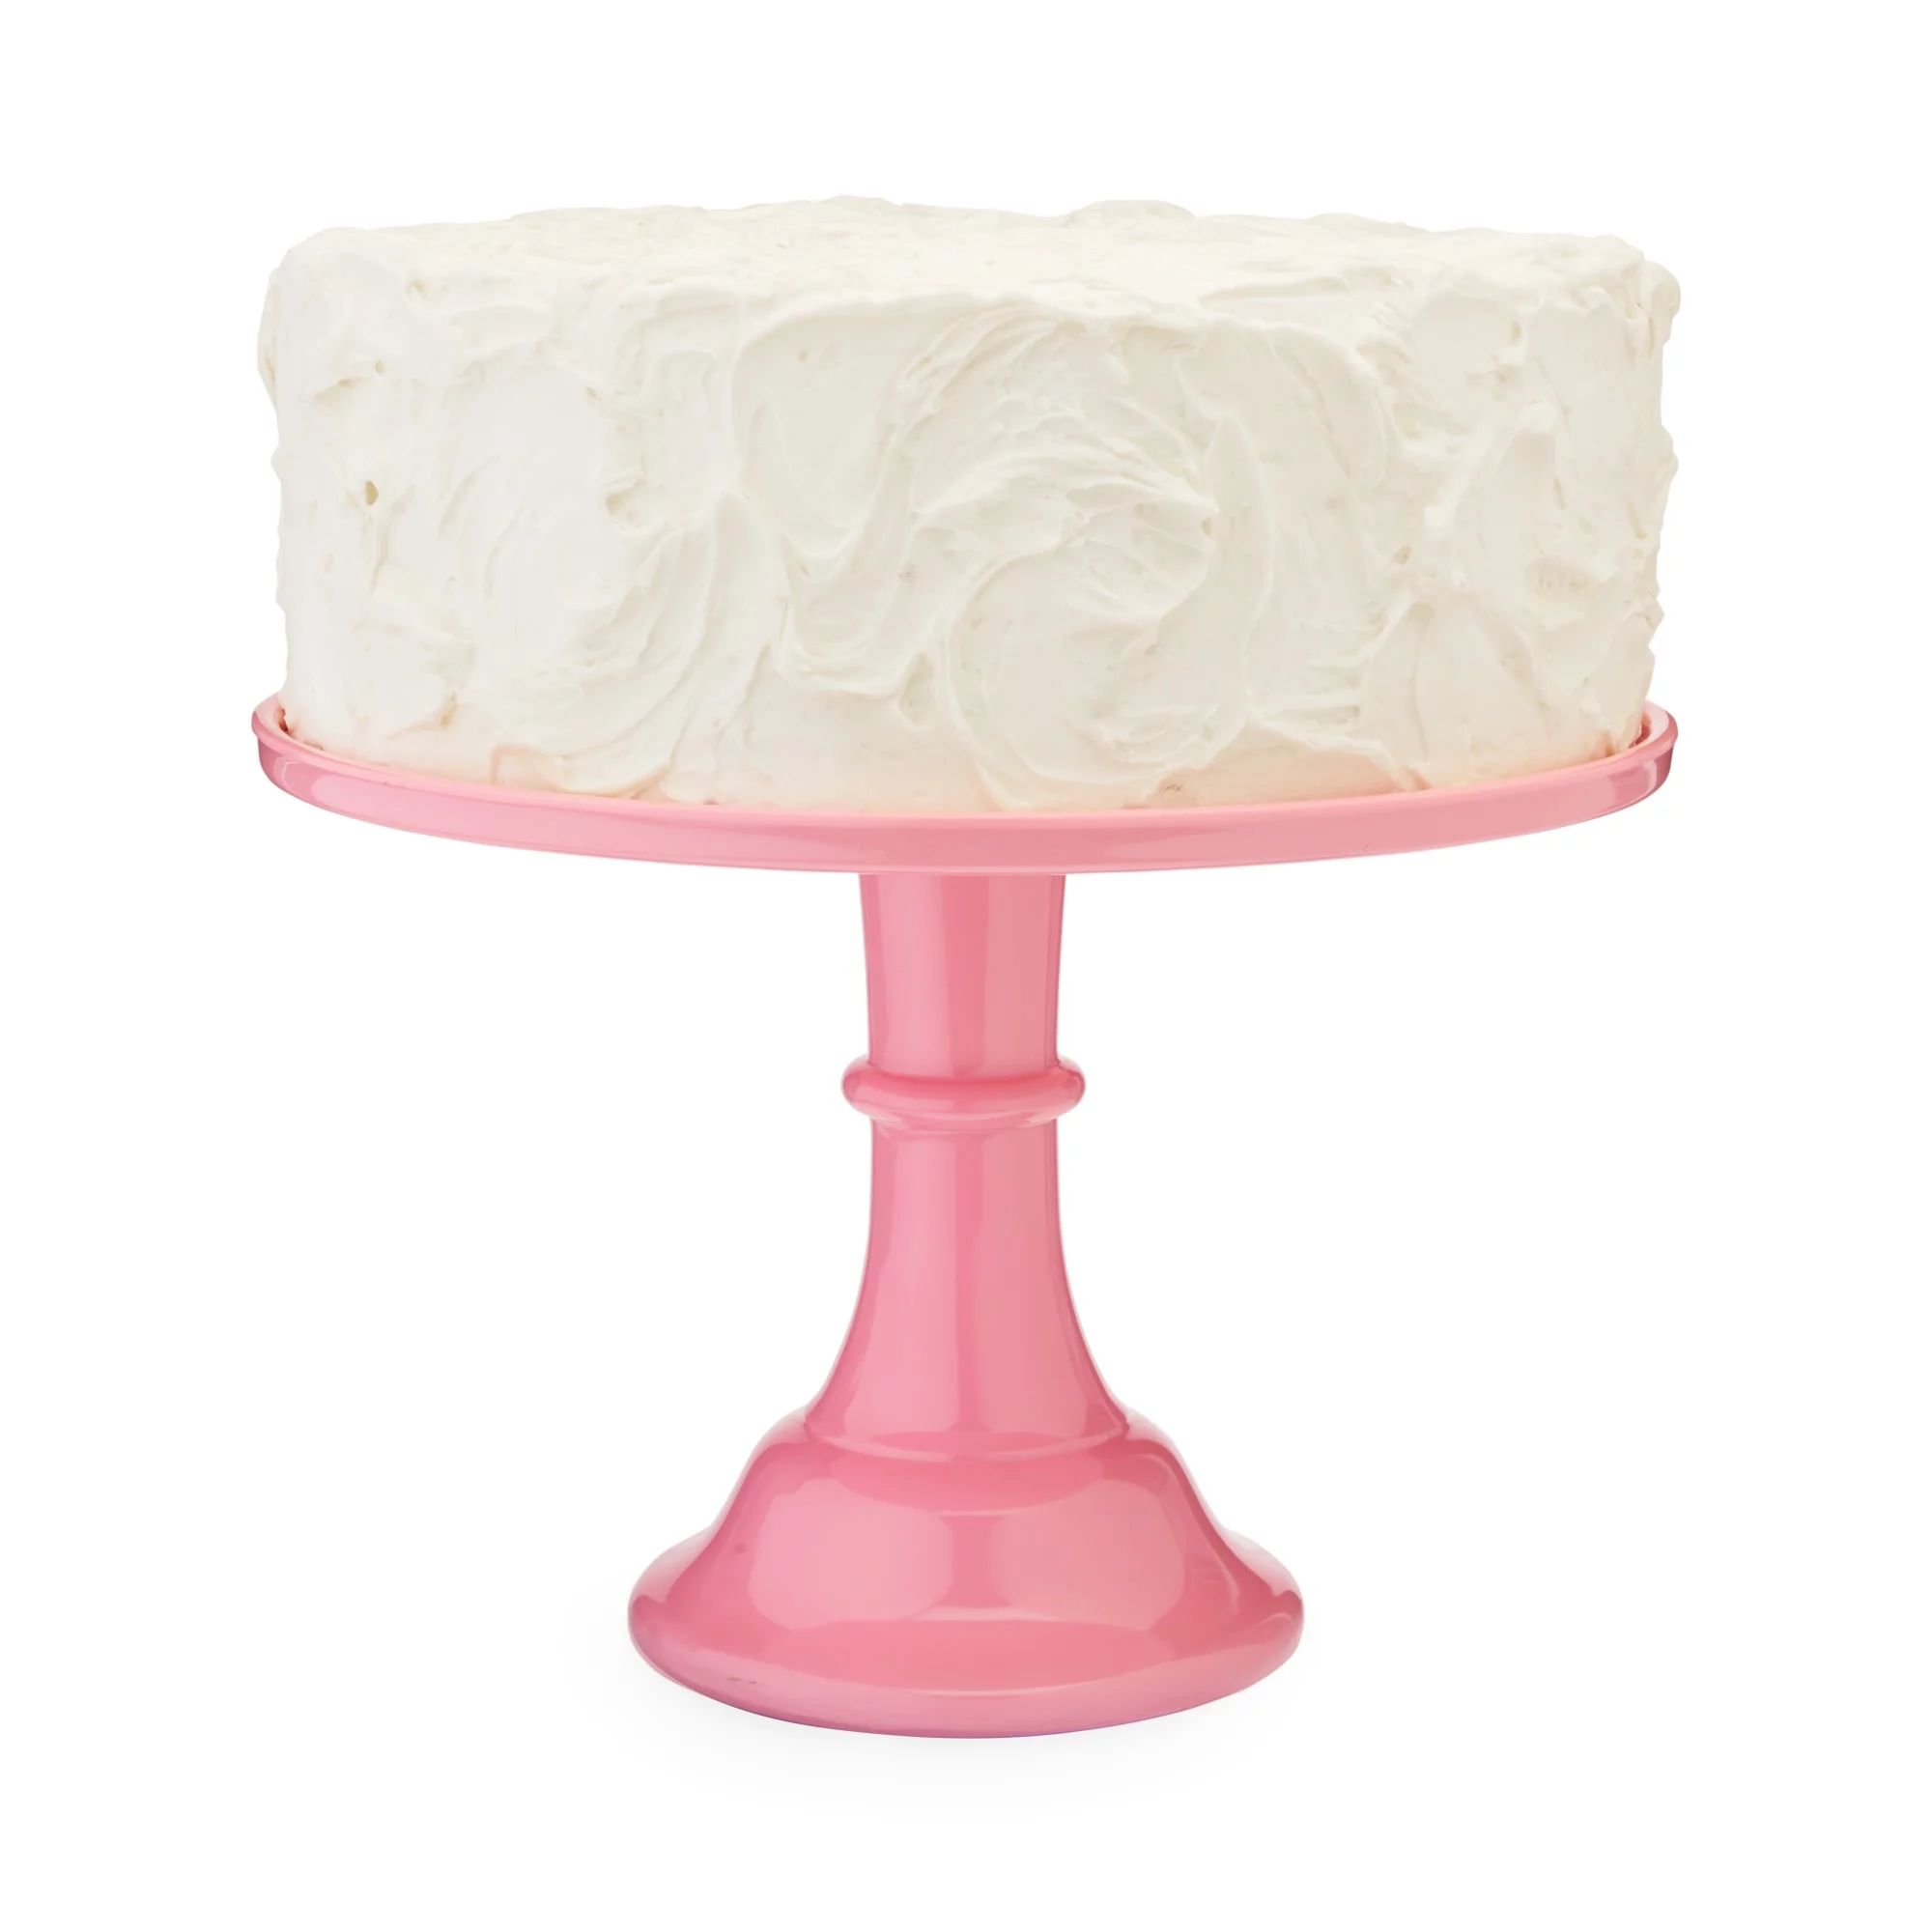 Twine Green Melamine Cupcake and Cake Stand - Dessert Accessory, Pink | Walmart (US)